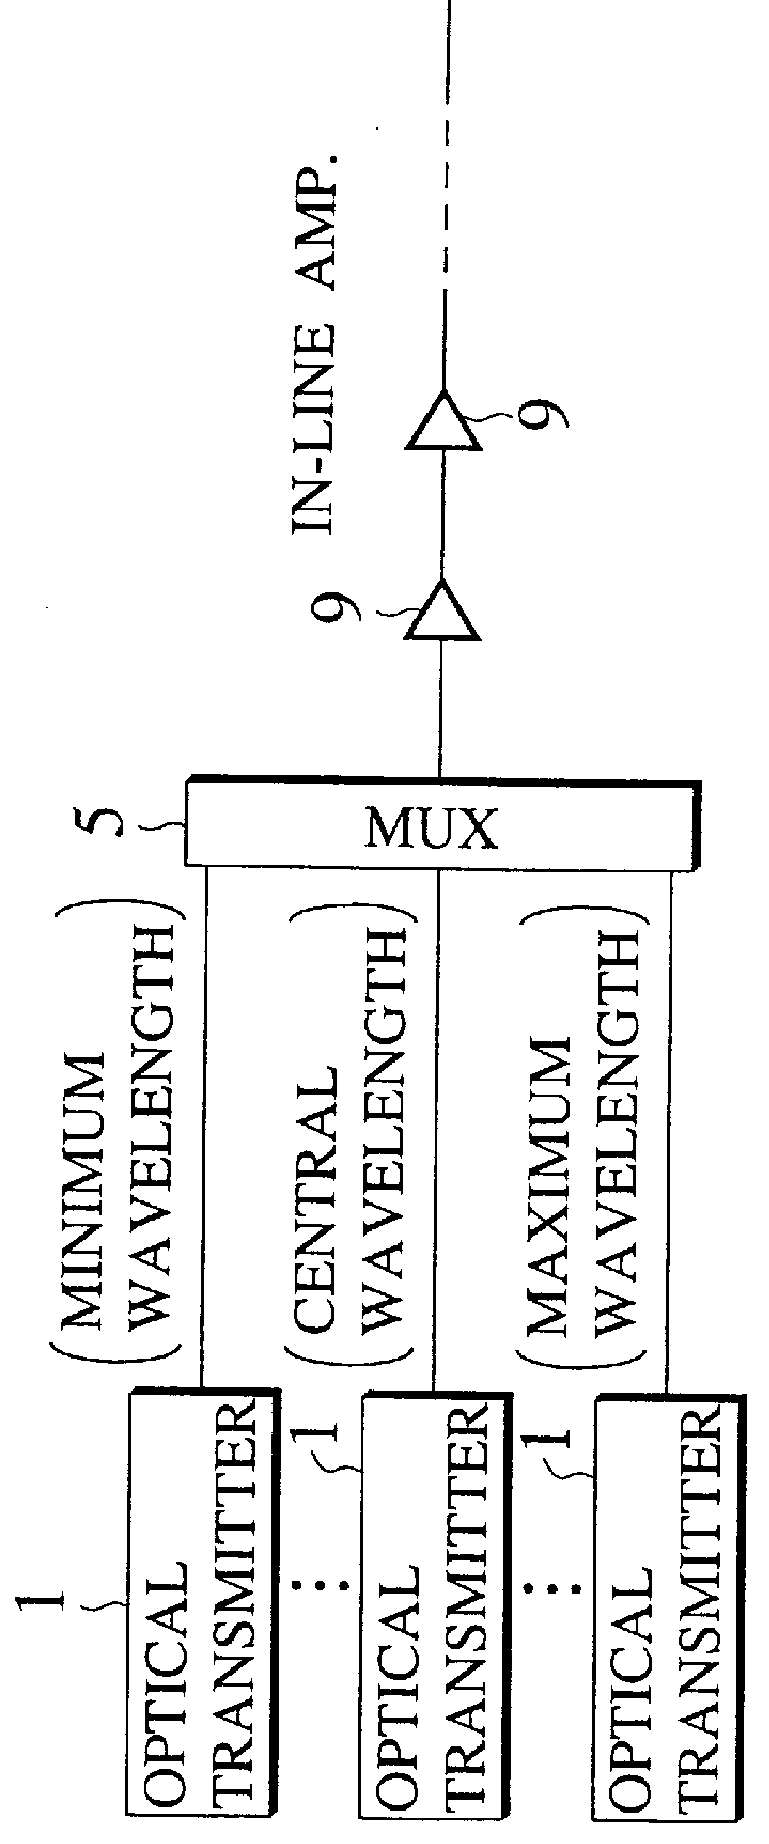 Wavelength-division multiplexing optical transmission system